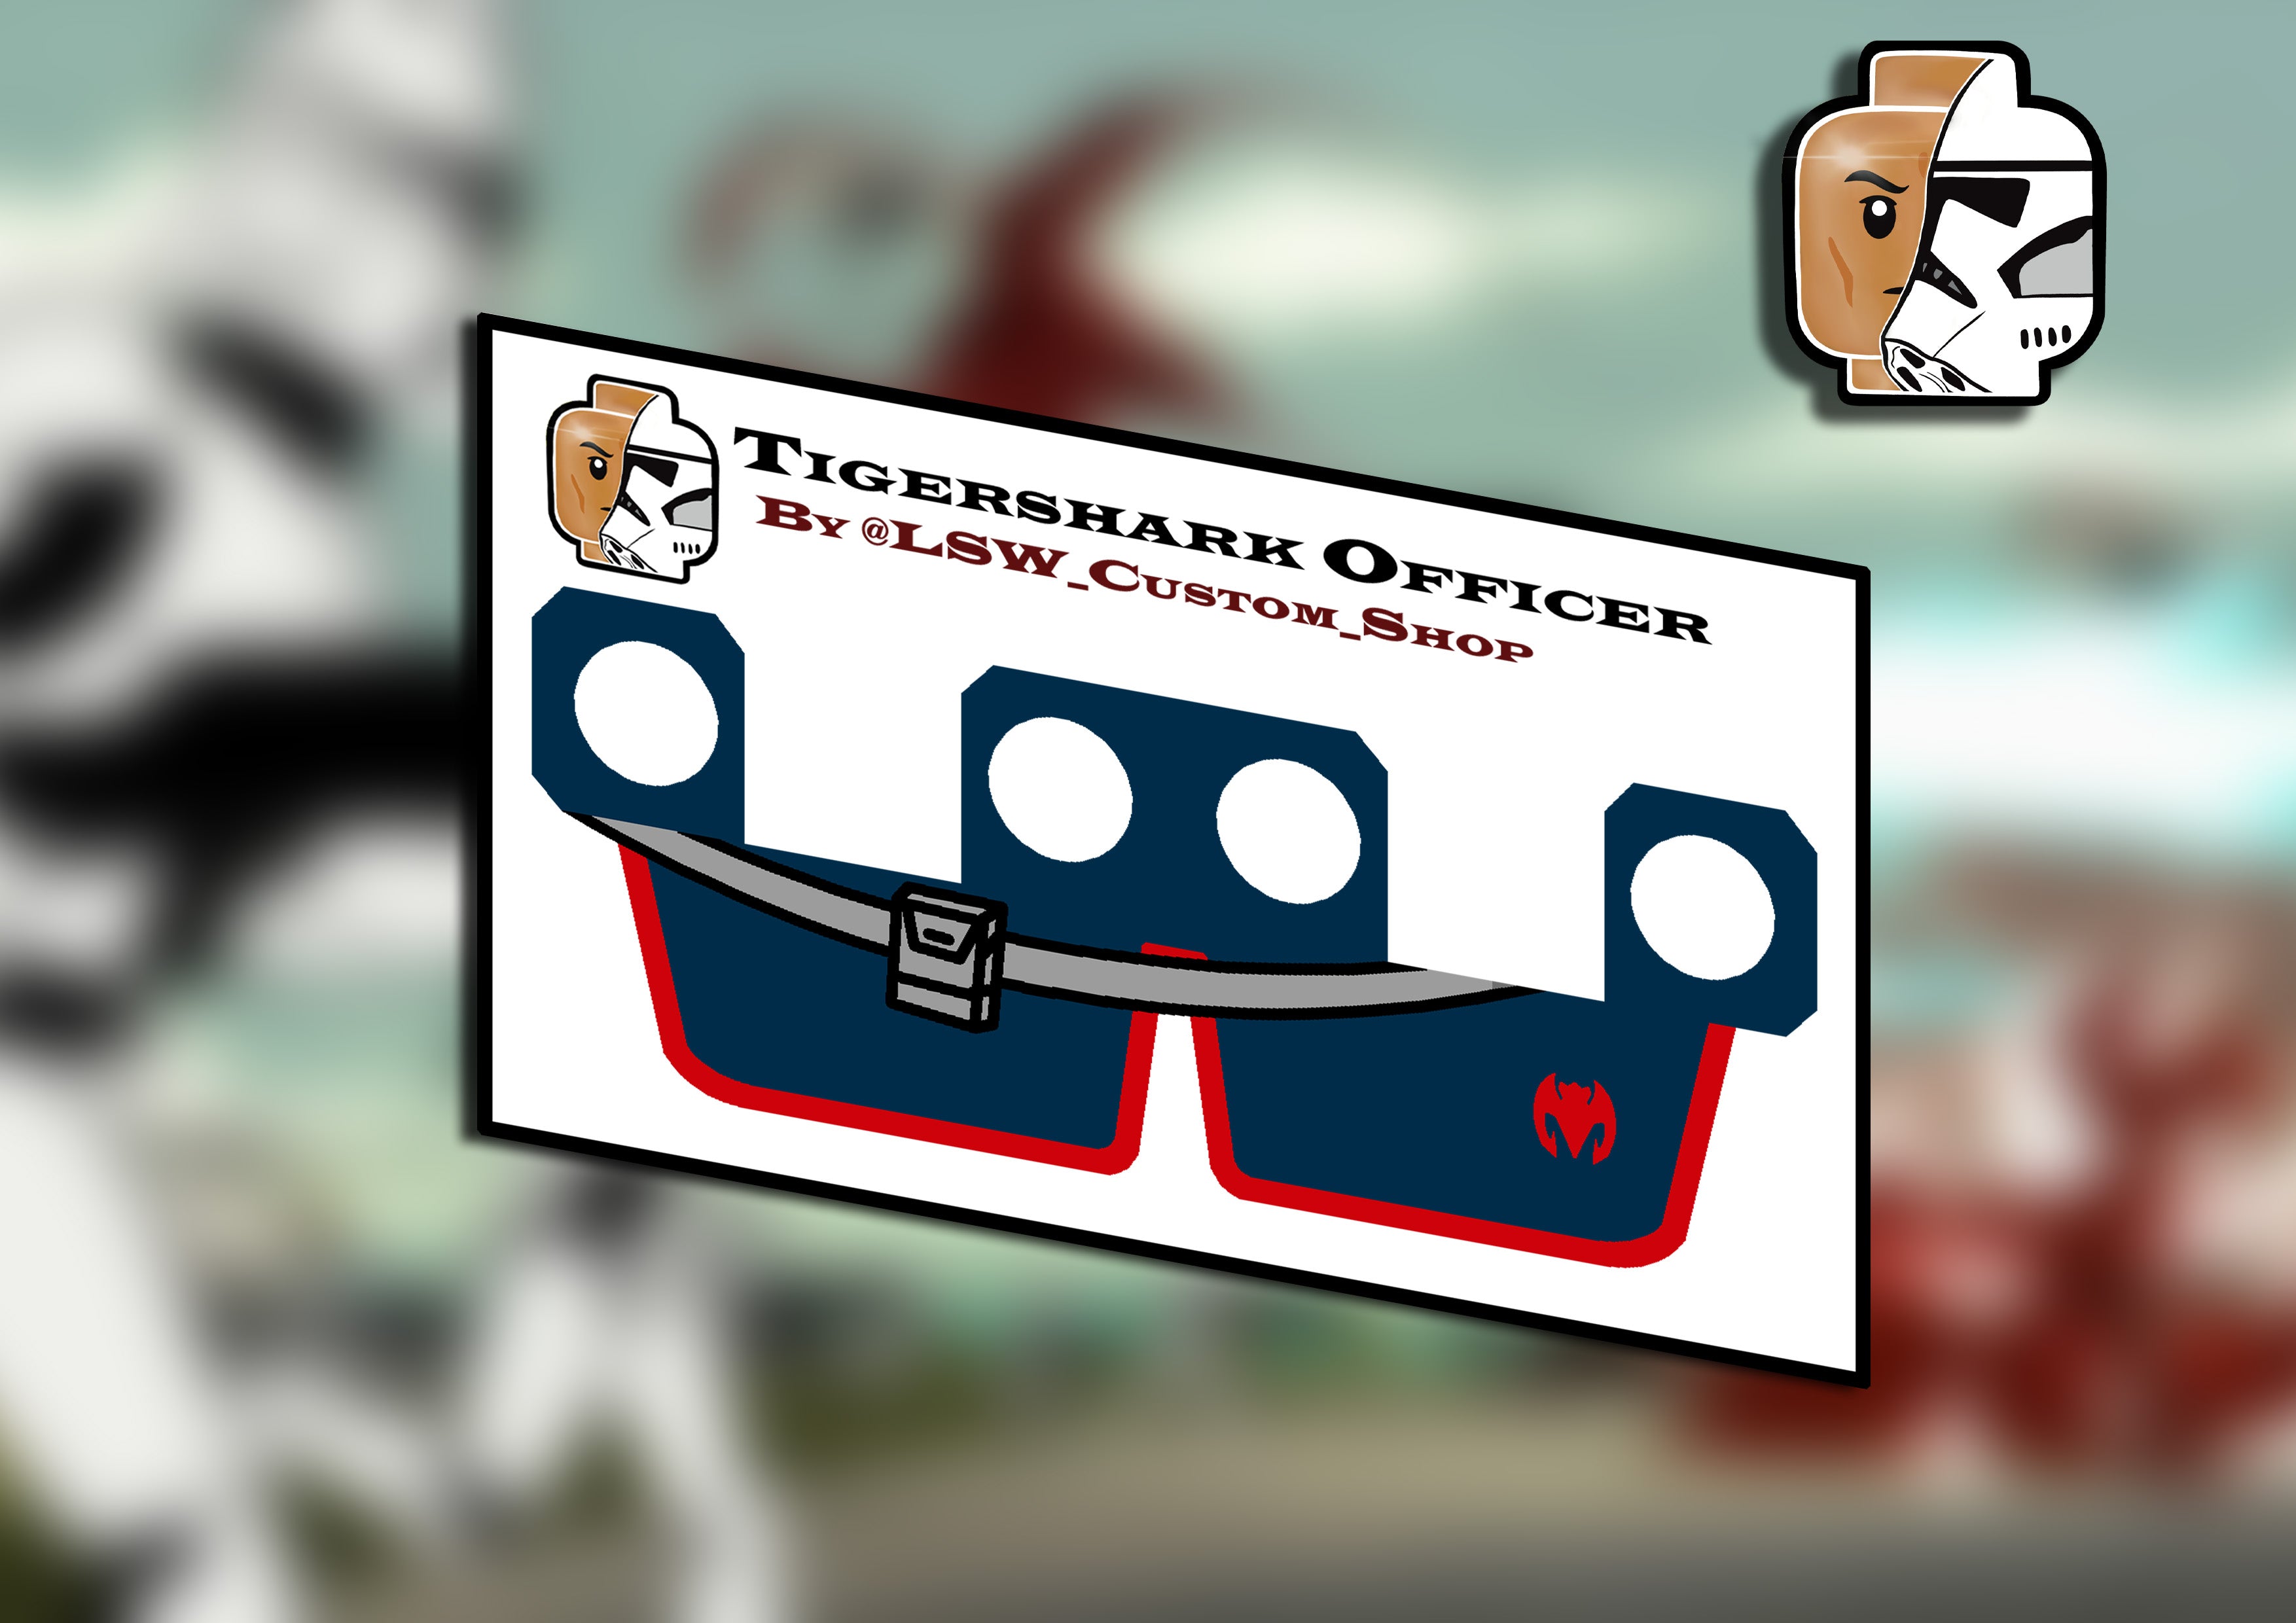 Tigershark Officer kama